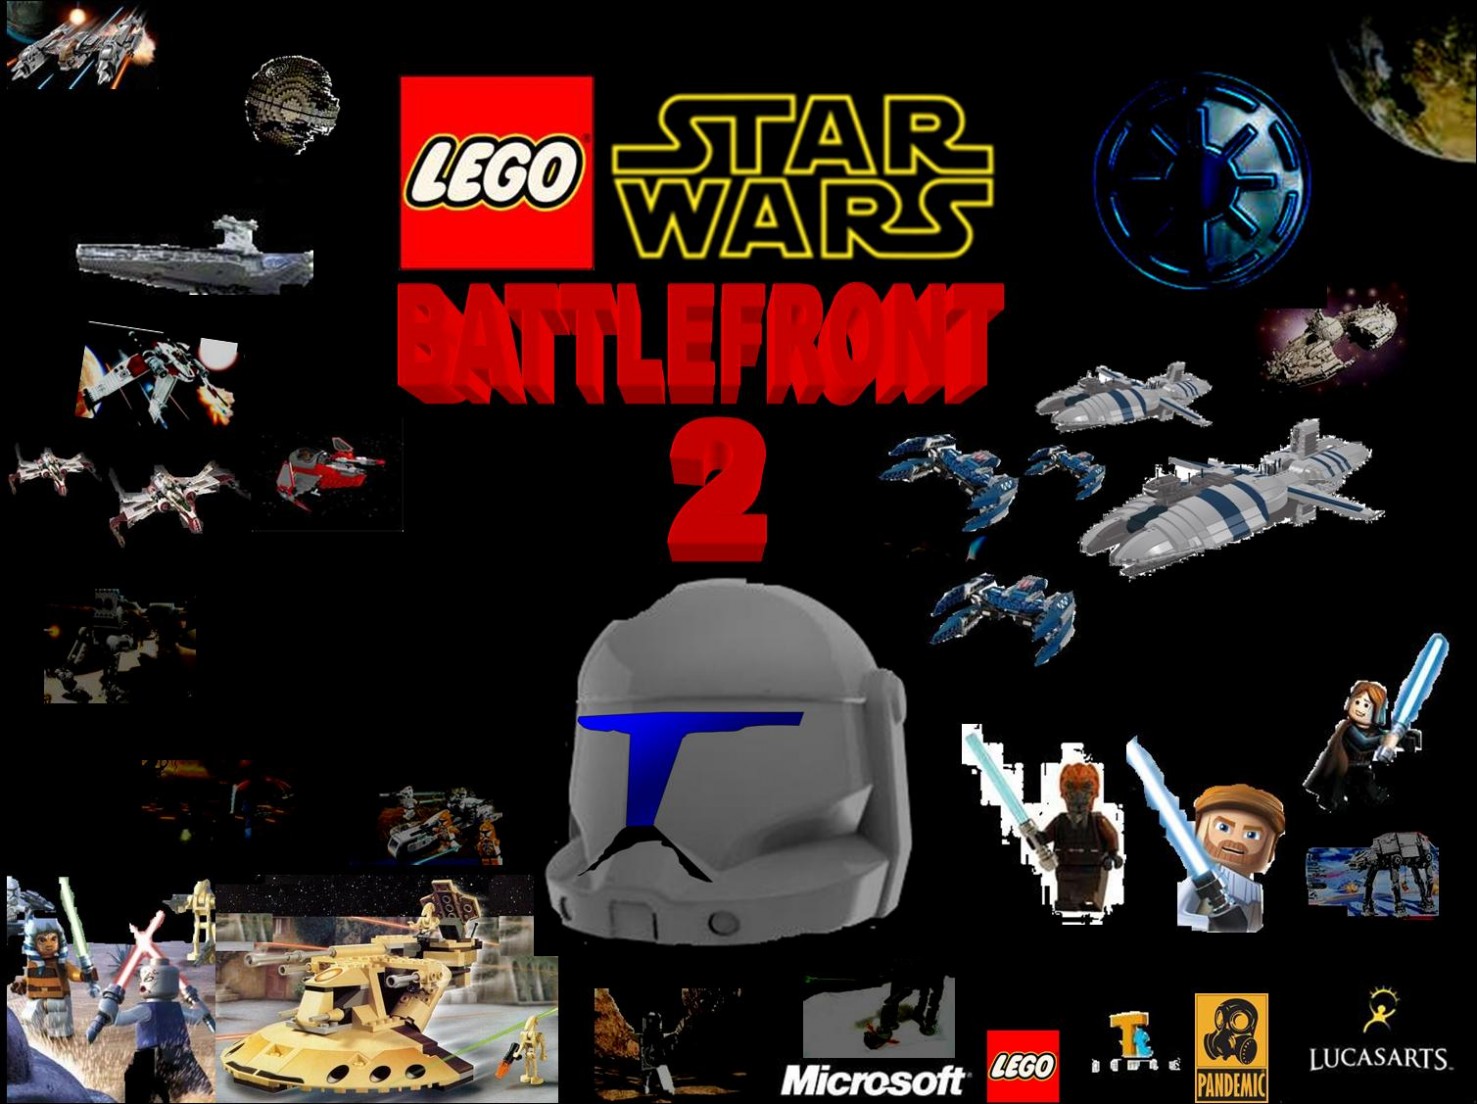 star wars battlefront 1 free download full version pc